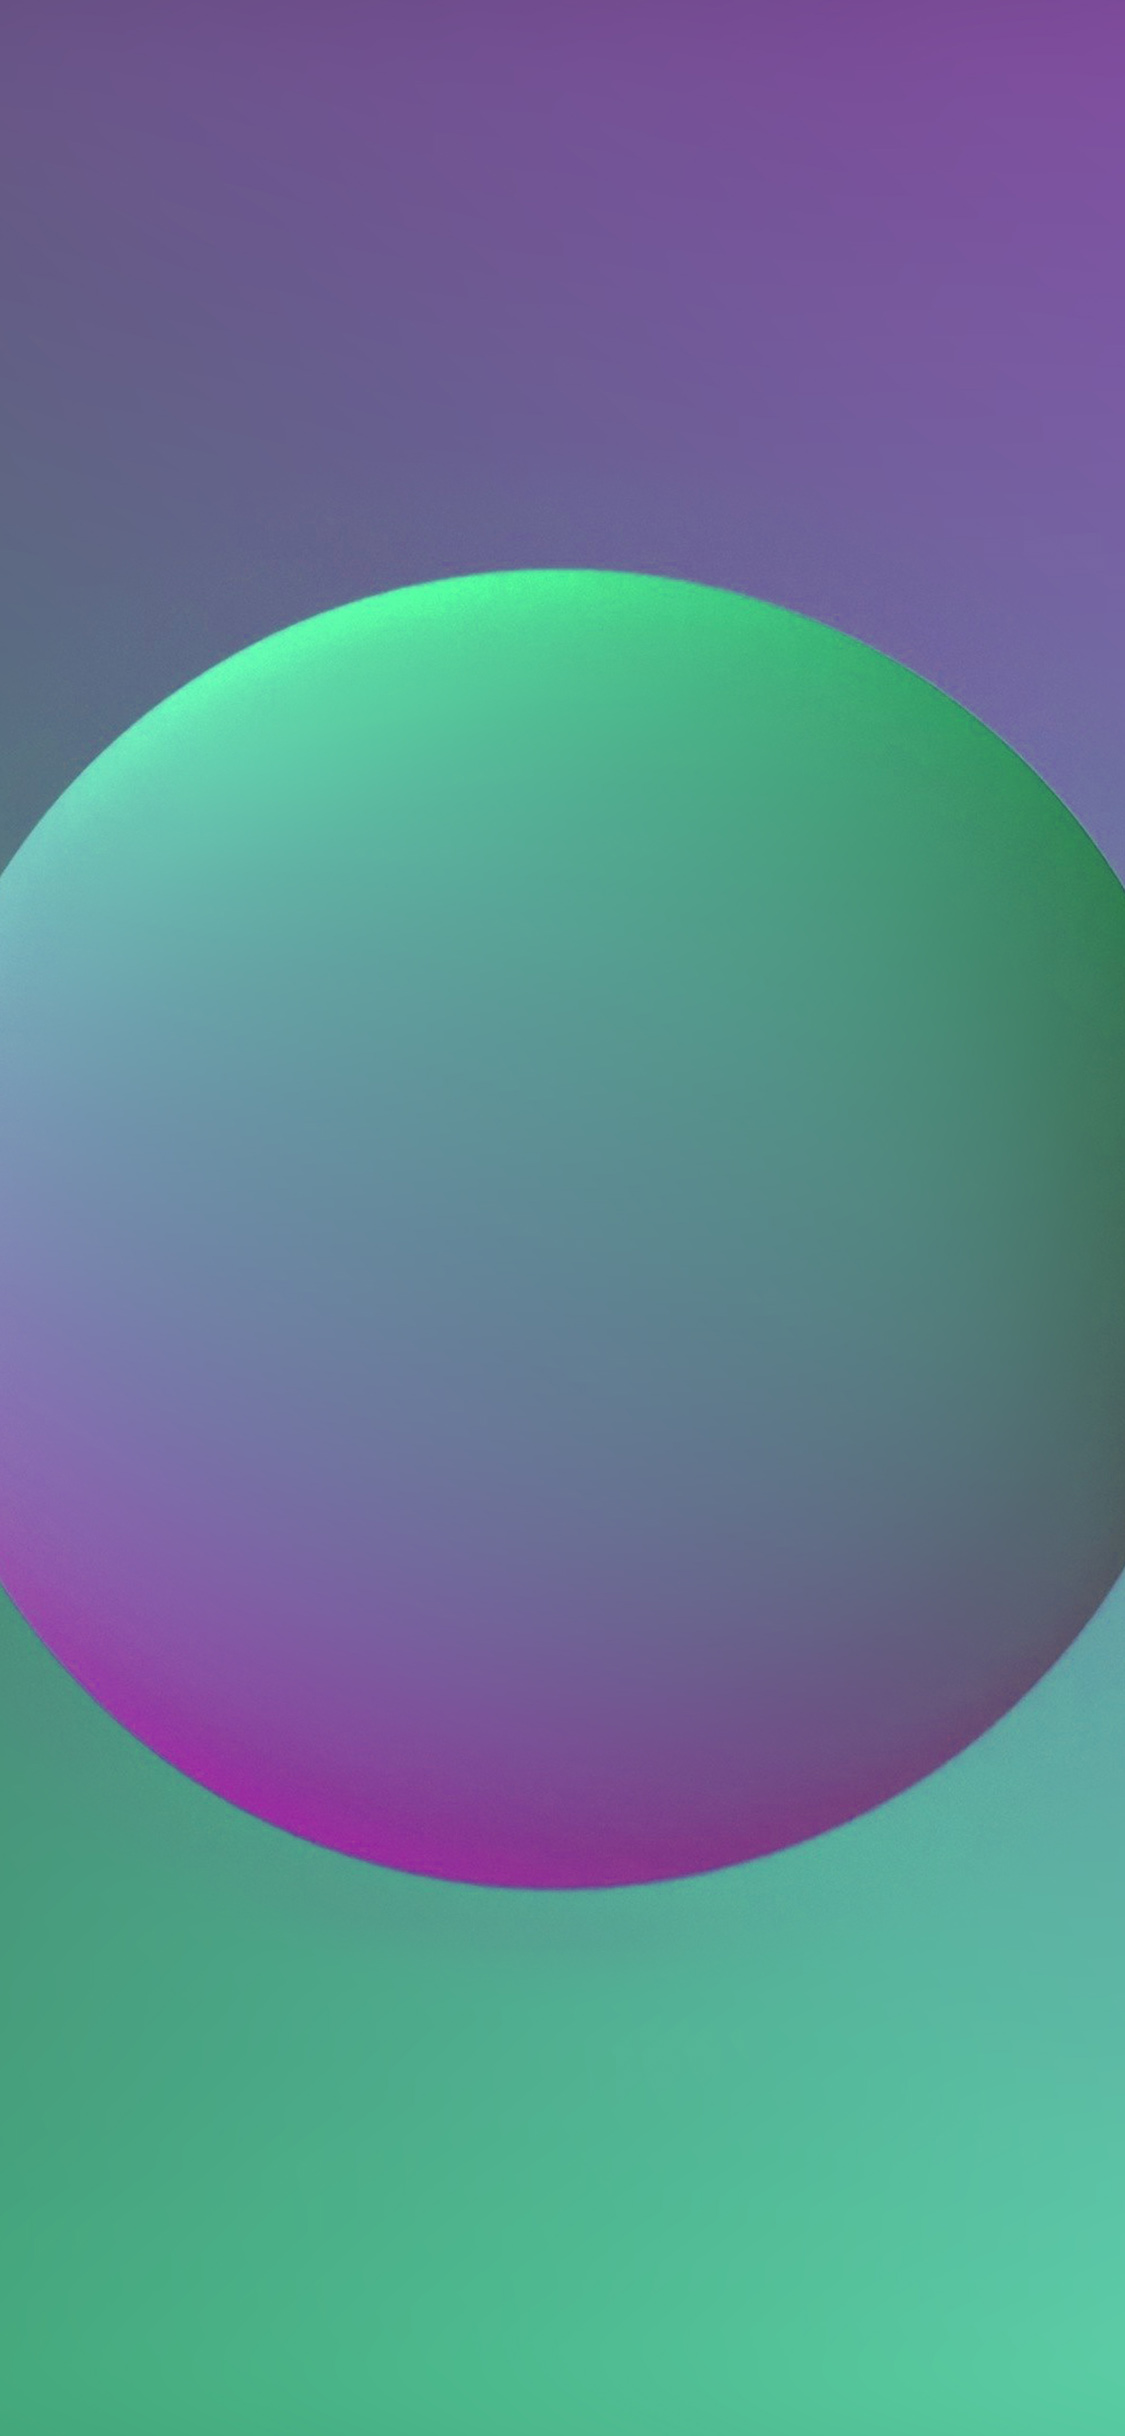 iPhone X wallpaper. minimal ball gradation purple green illustration art